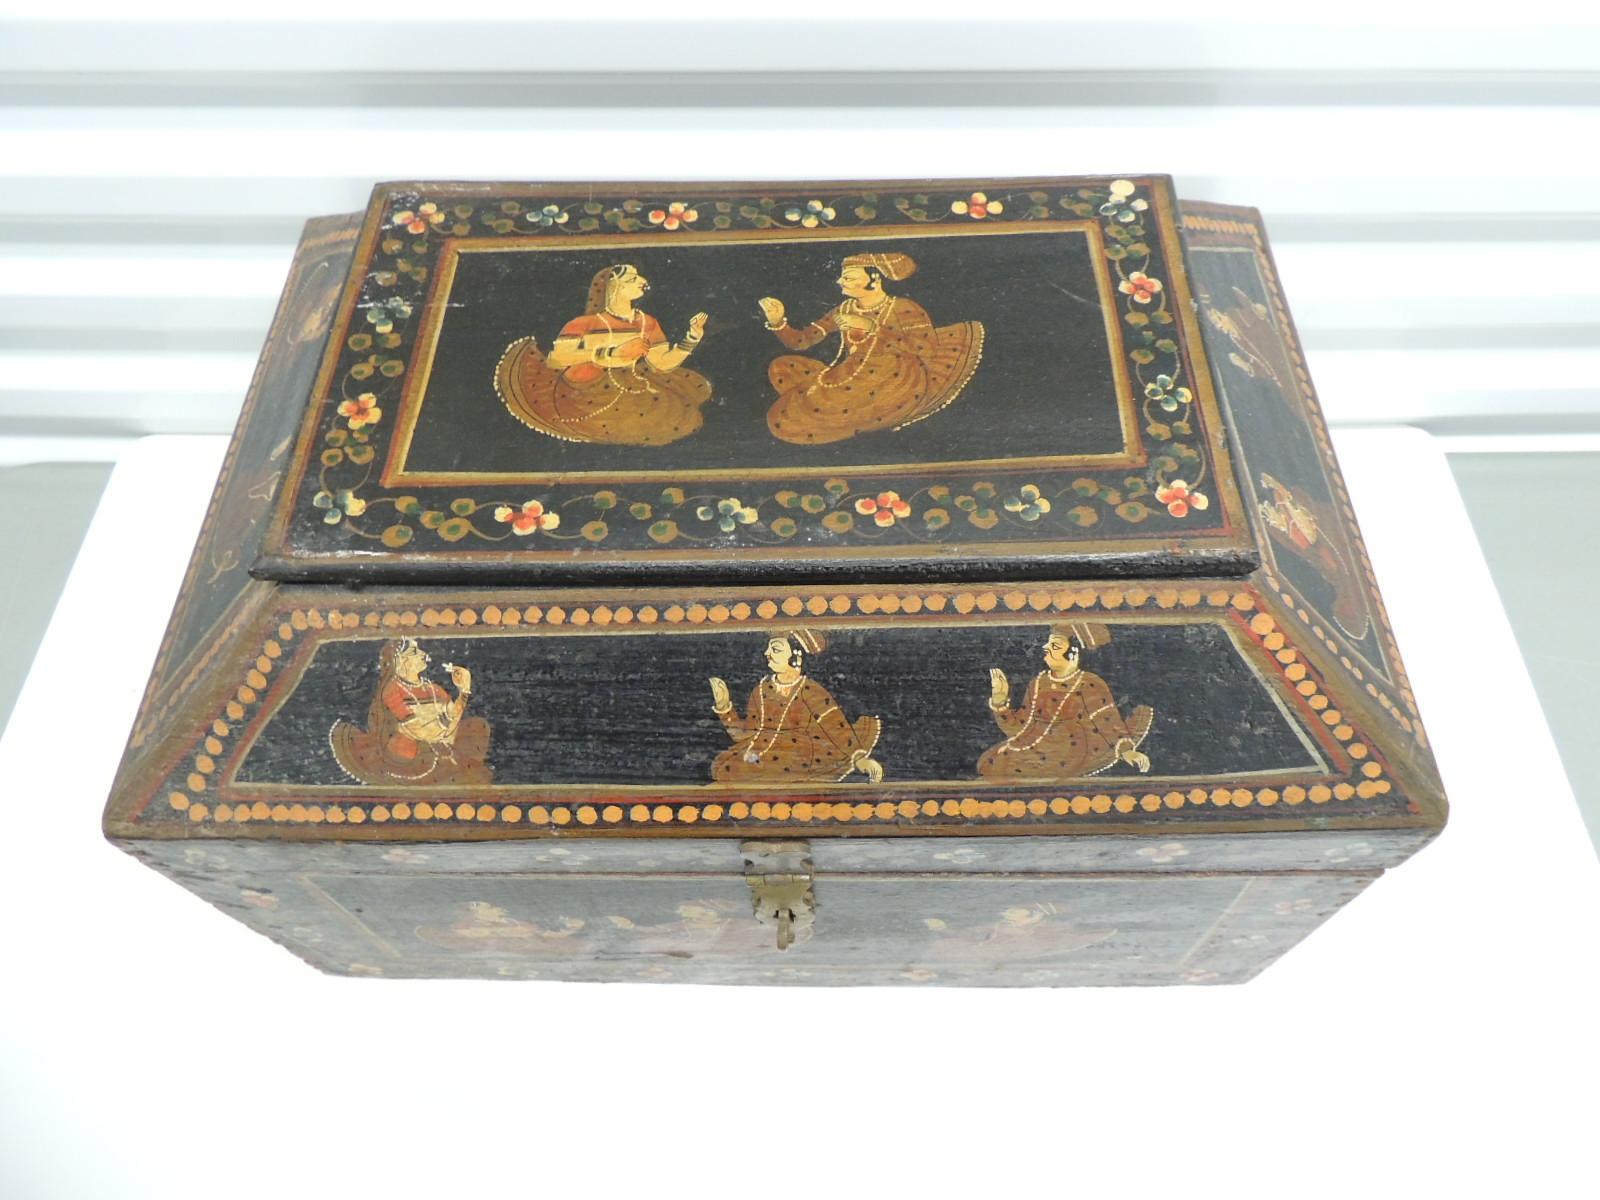 Moorish Large Scale Vintage Hand-Painted Indian Decorative Box